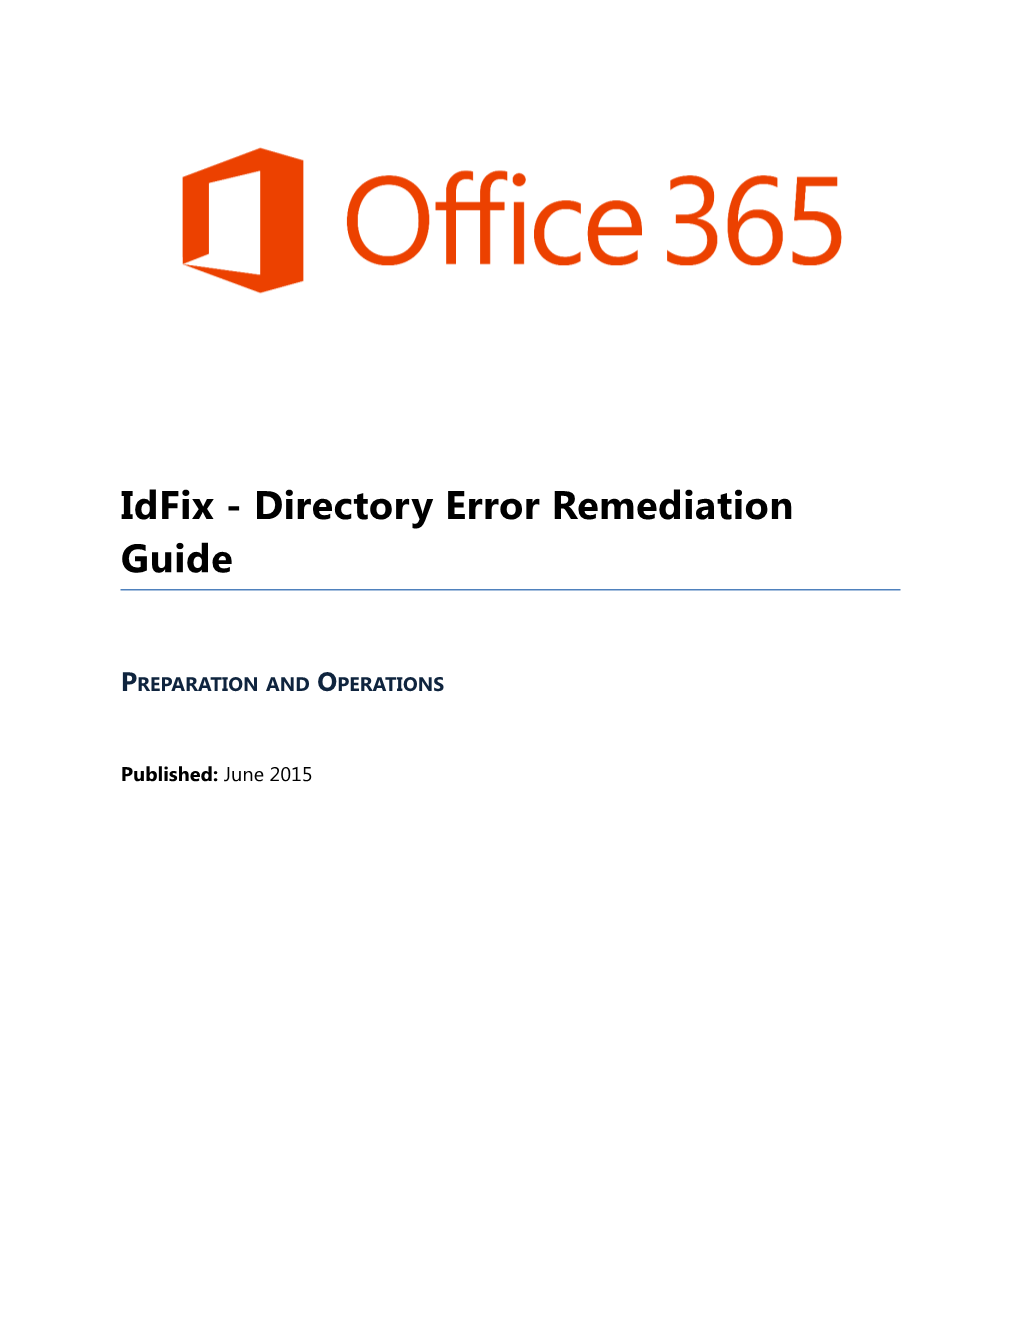 Idfix - Directory Error Remediation Guide s1